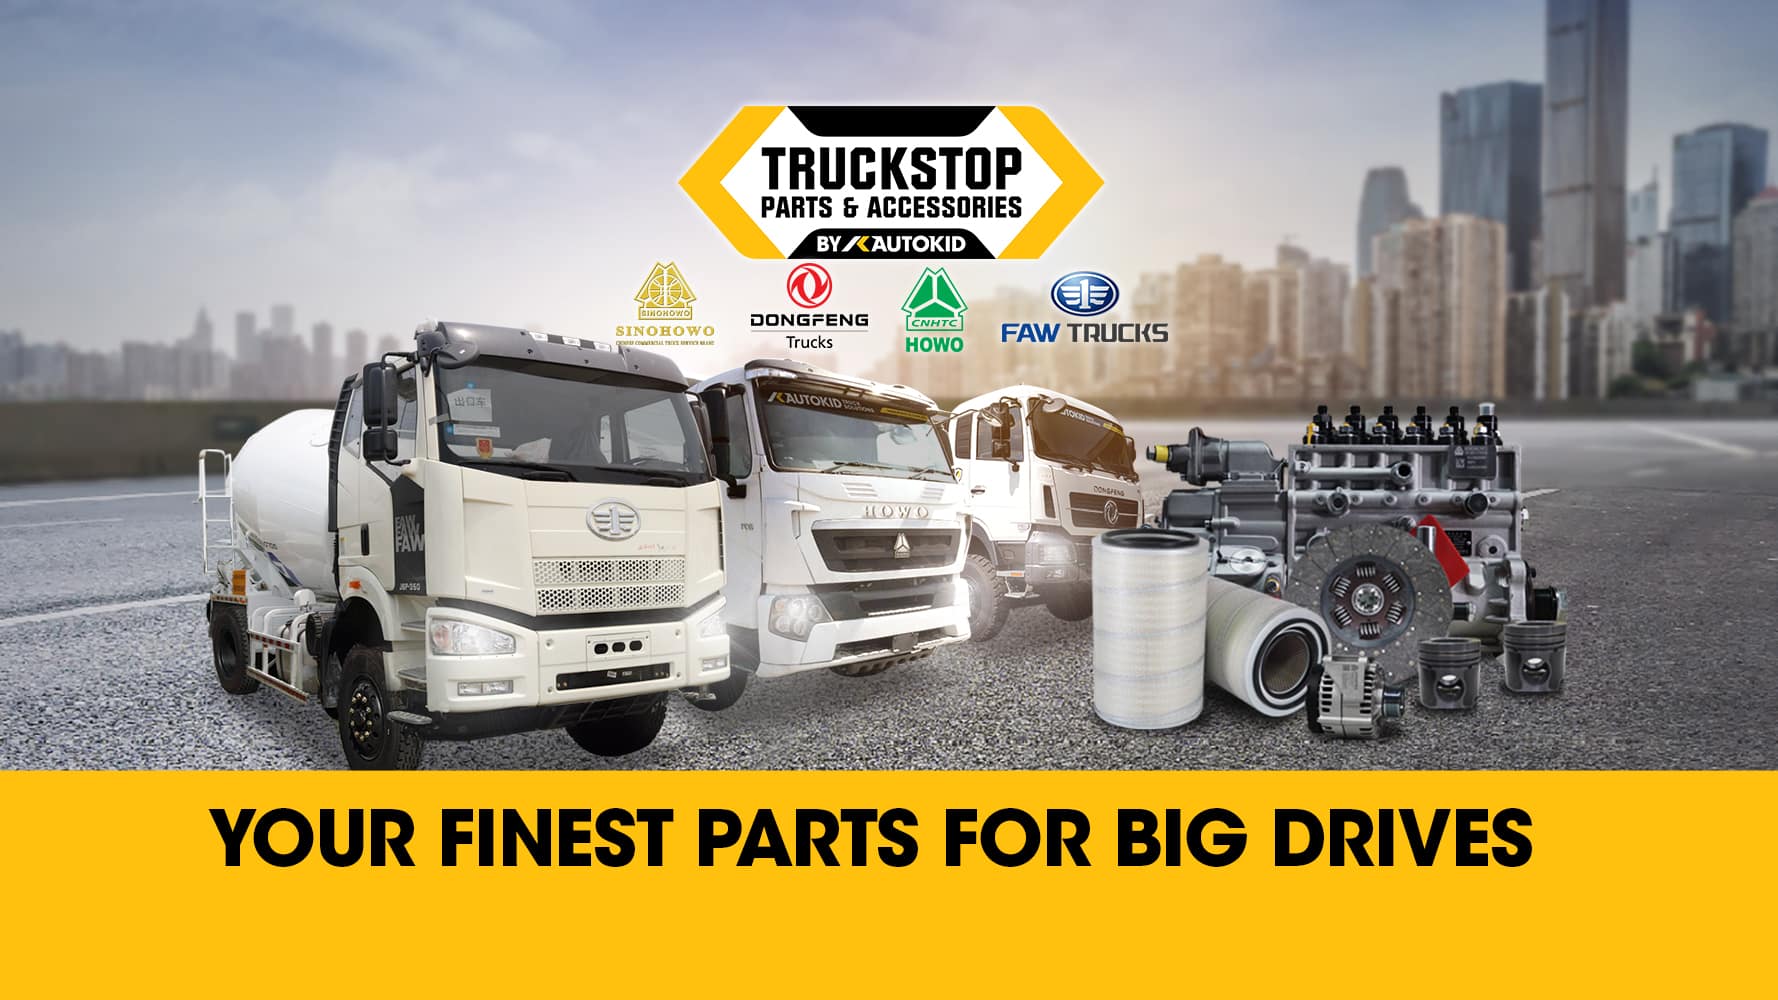 prins høj Universel TRUCKSTOP: Your finest truck parts for big drives - Autokid